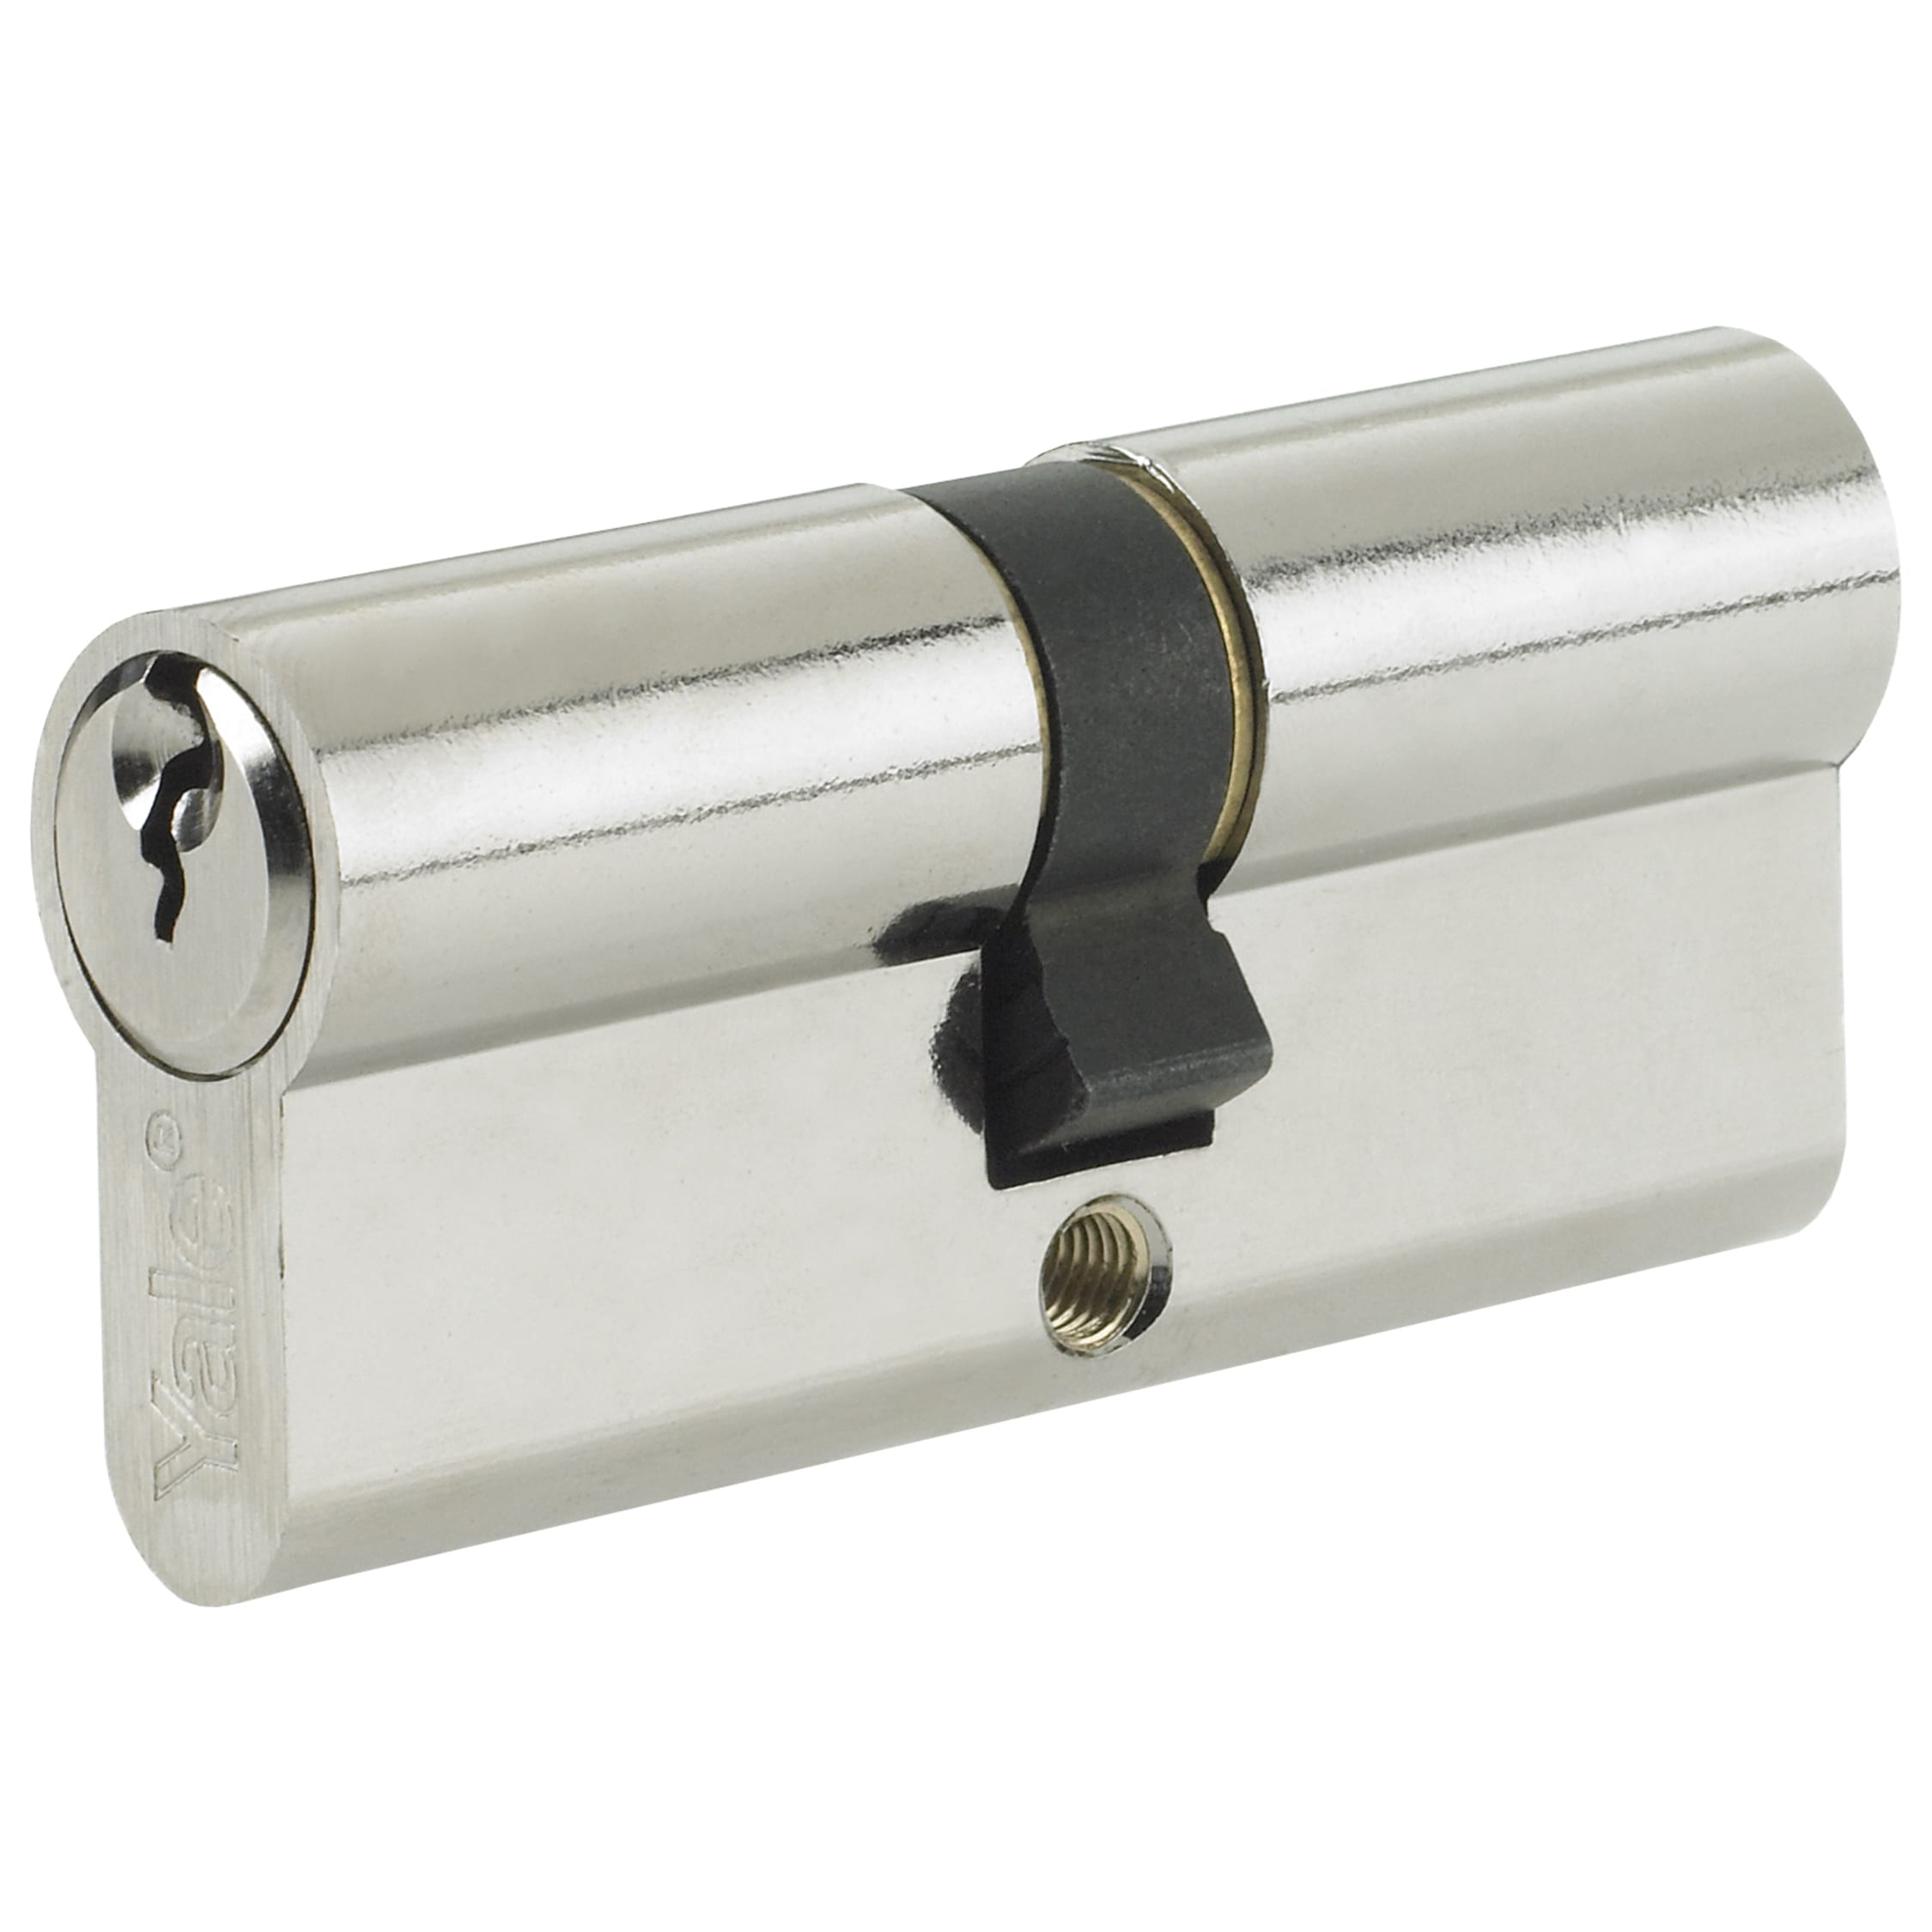 Yale Security 75mm Turn Knob SNP Euro Profile Door Lock Key Upvc Cylinder 33030 